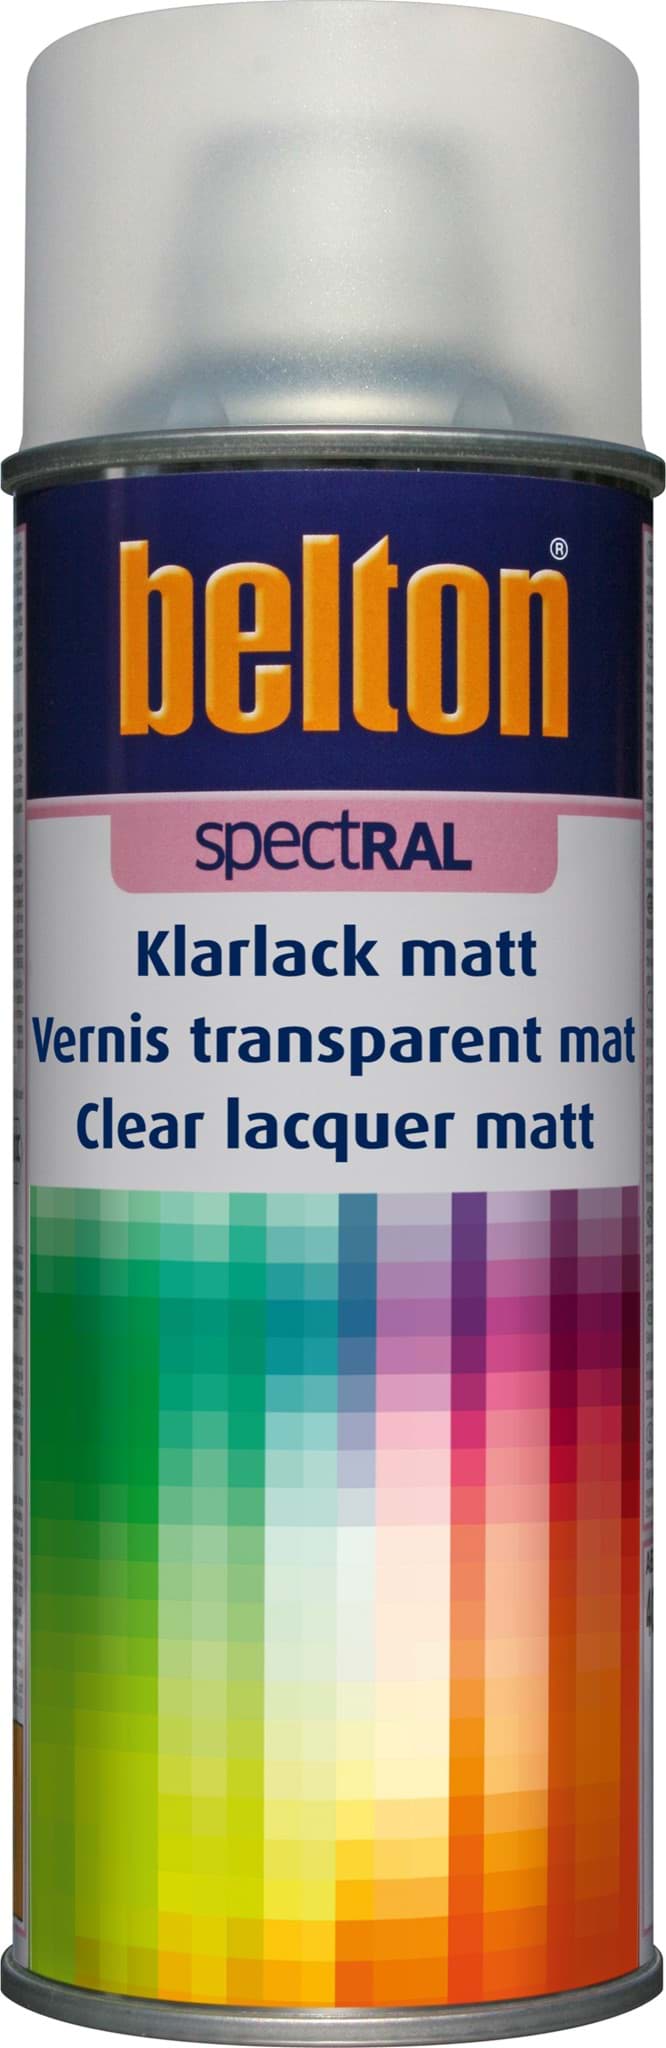 Picture of Belton RAL Spectral Klarlack matt 400ml Lackspray